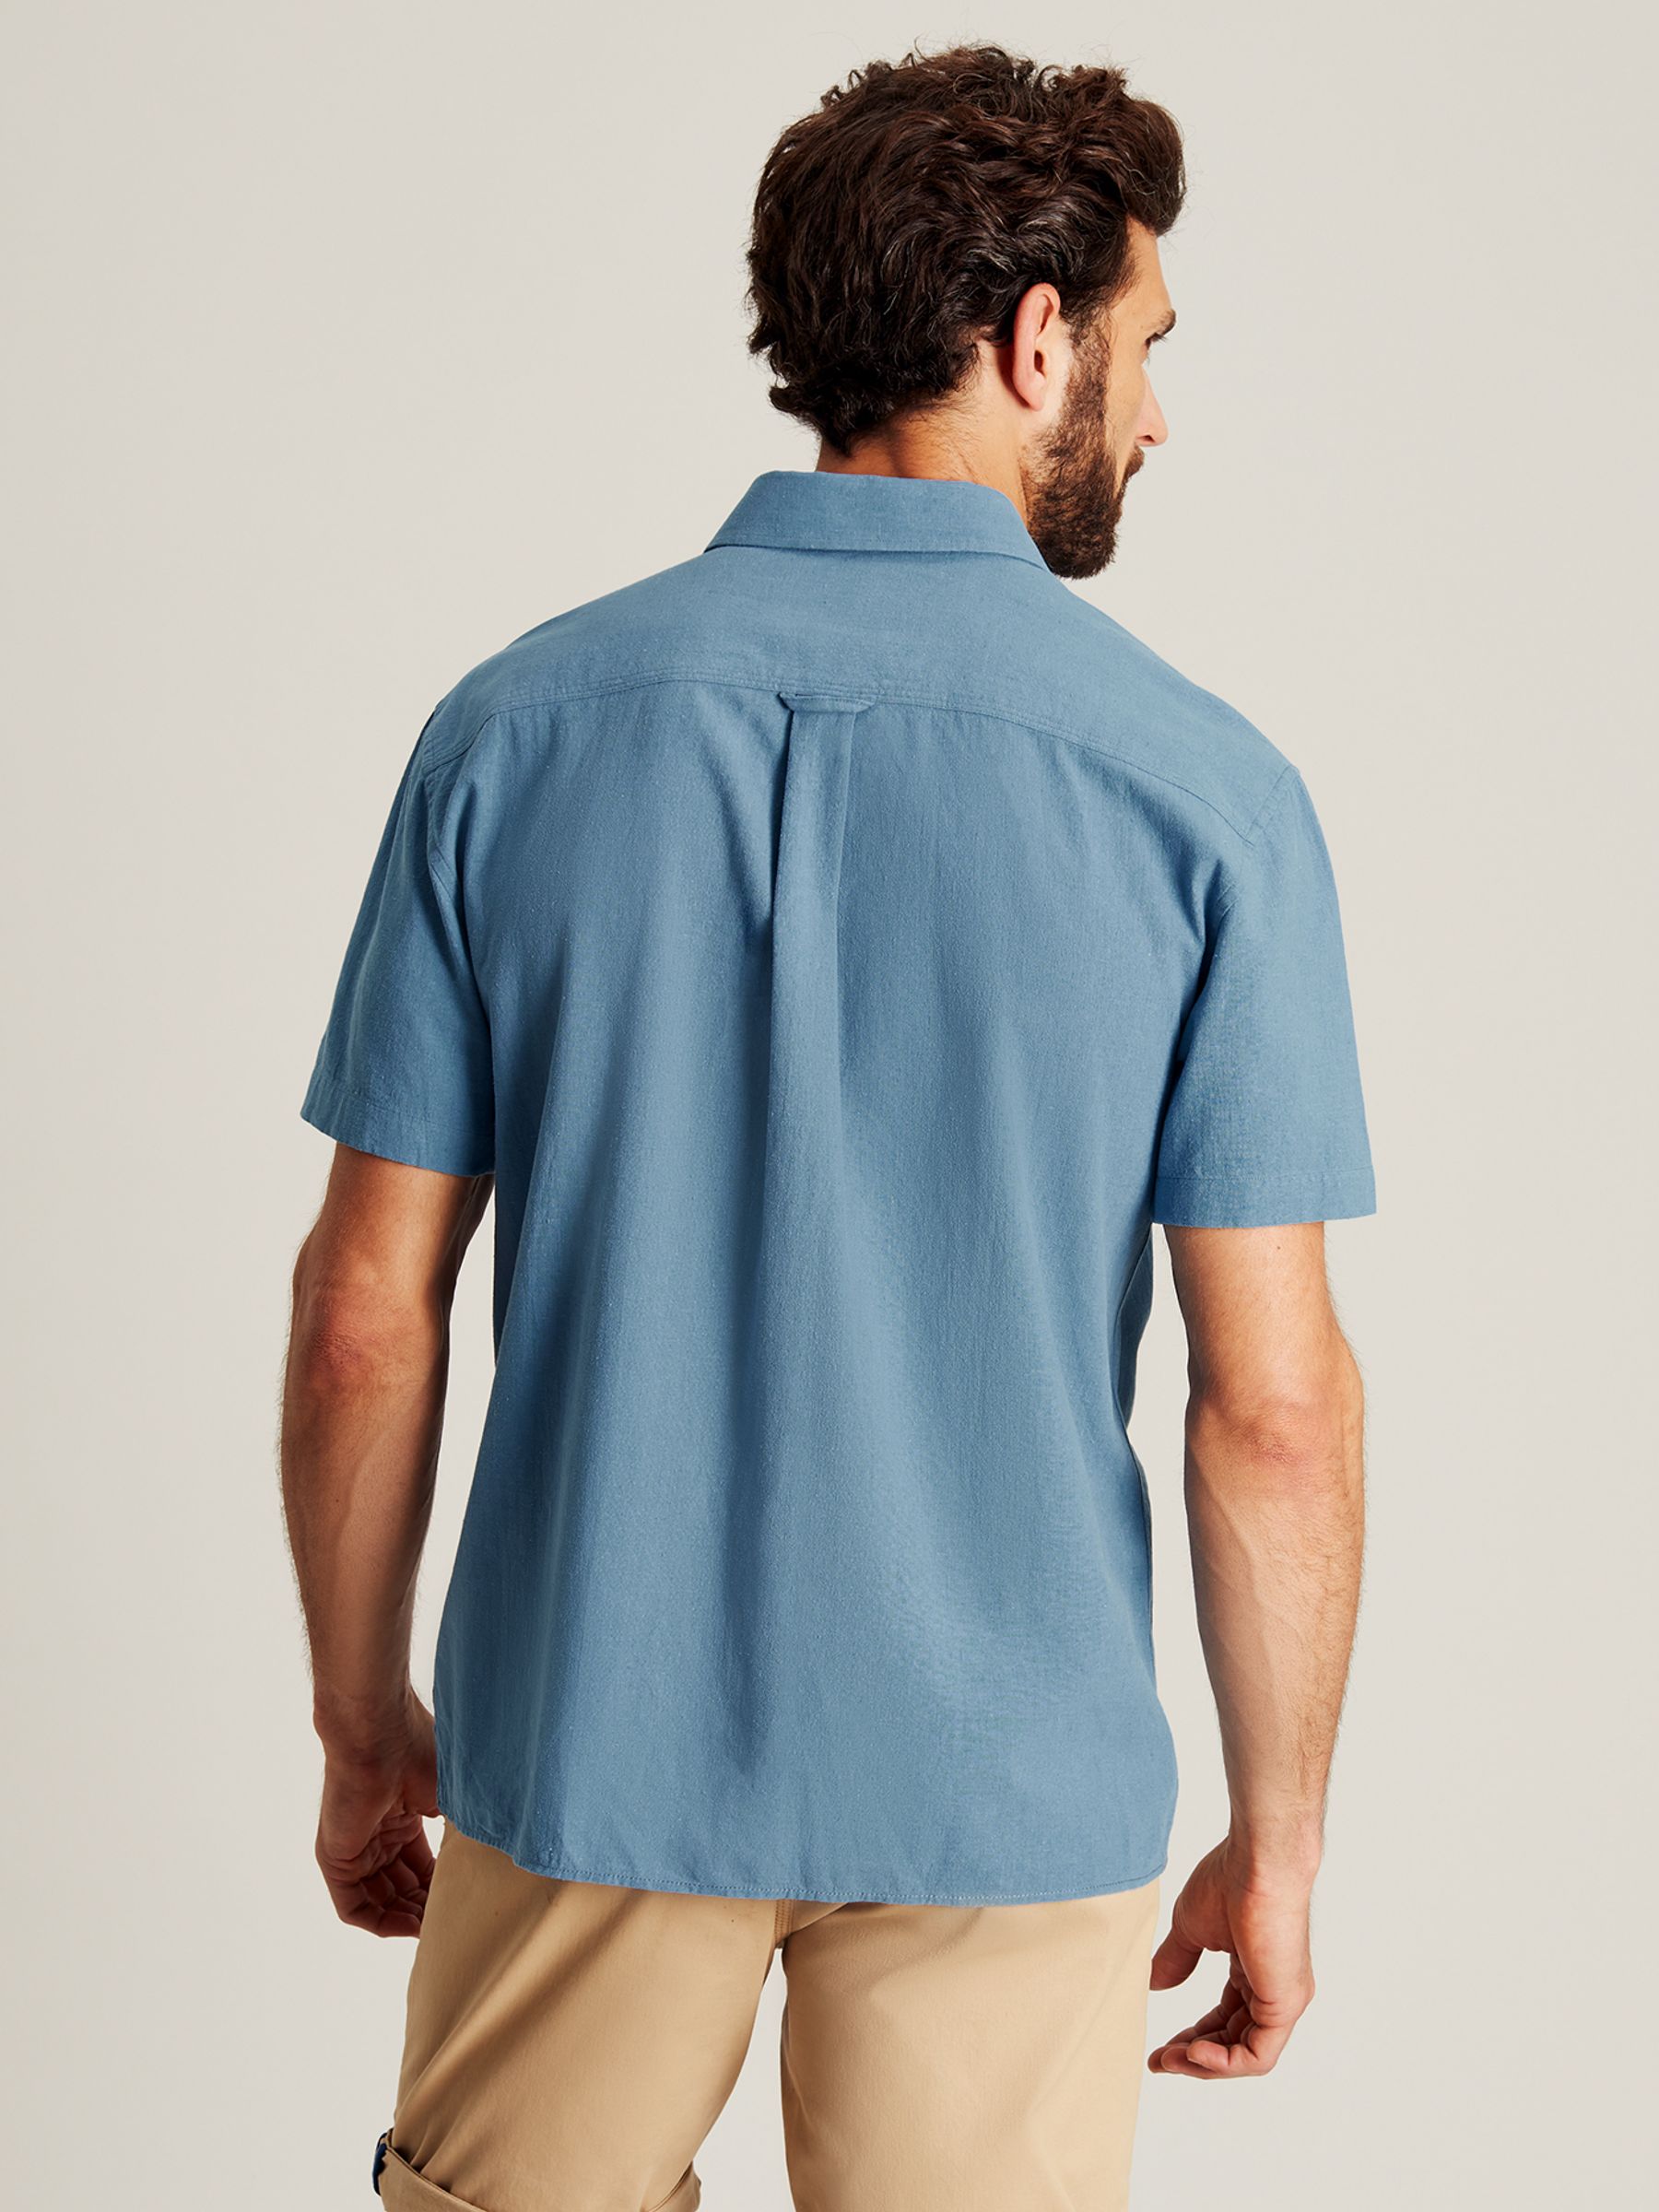 Buy Joules Breaker Short Sleeve Linen Shirt from the Joules online shop